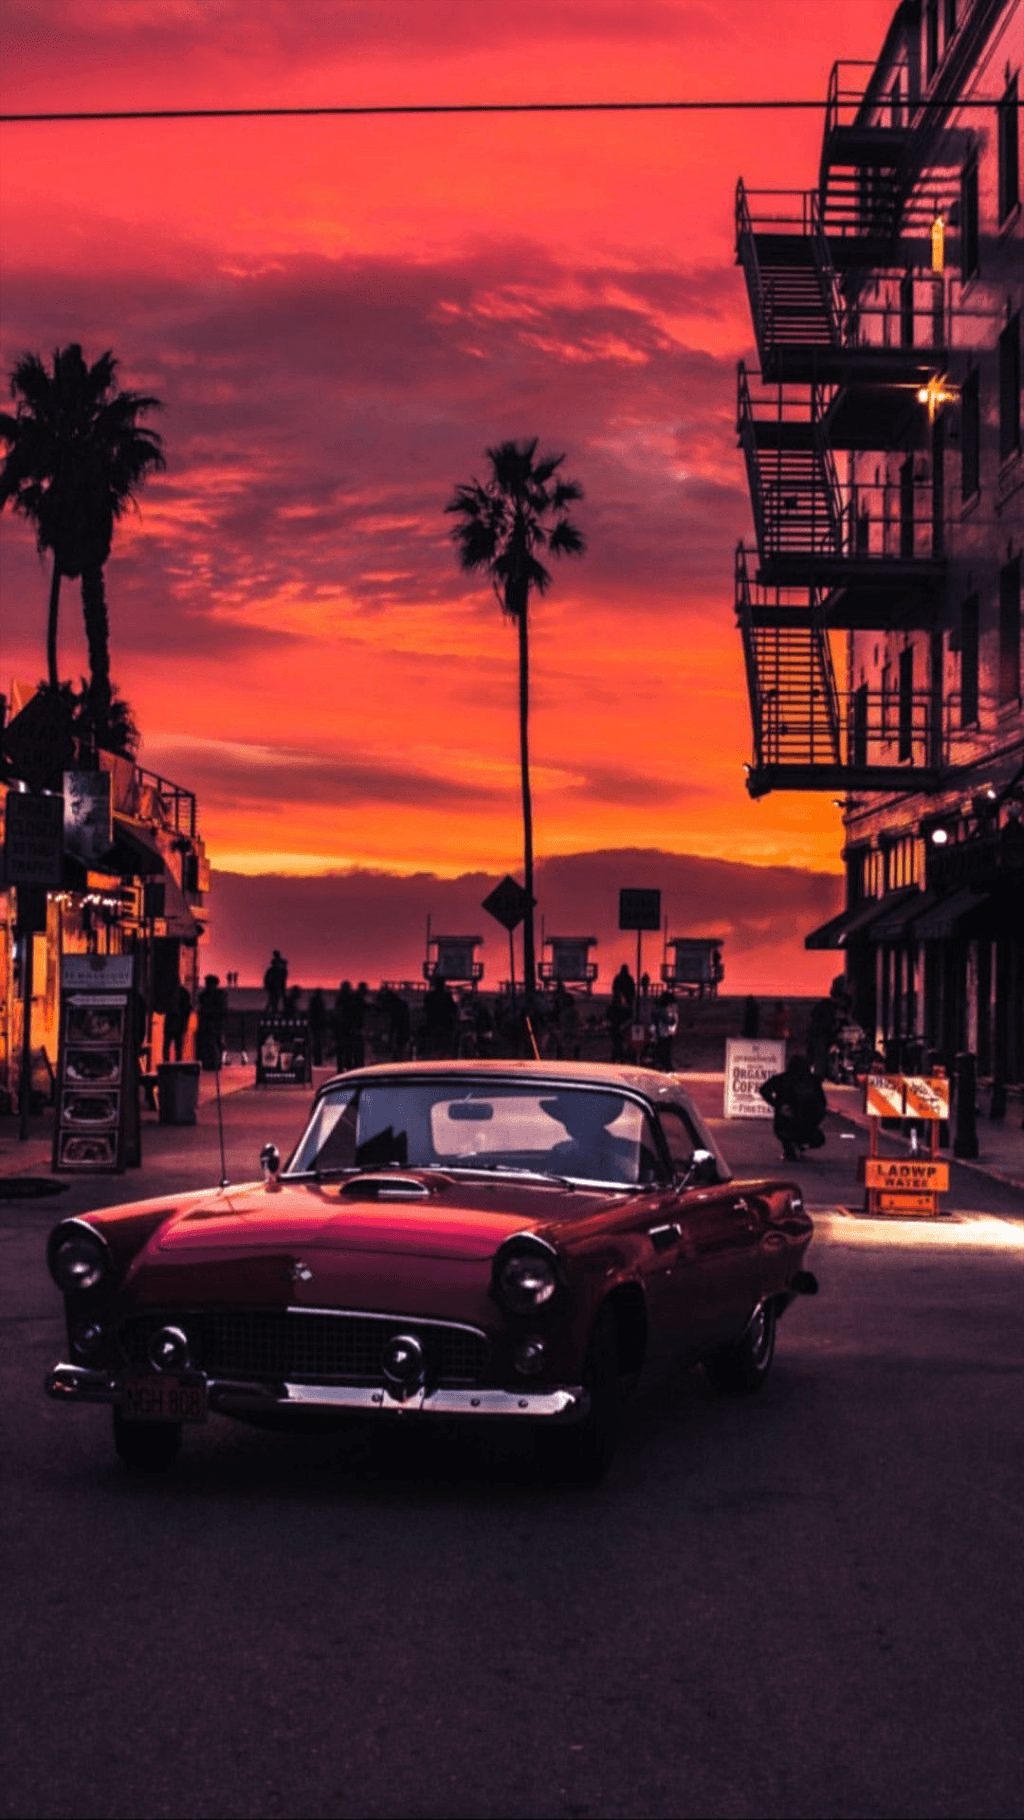 Car Sunset Wallpaper Free Car Sunset Background